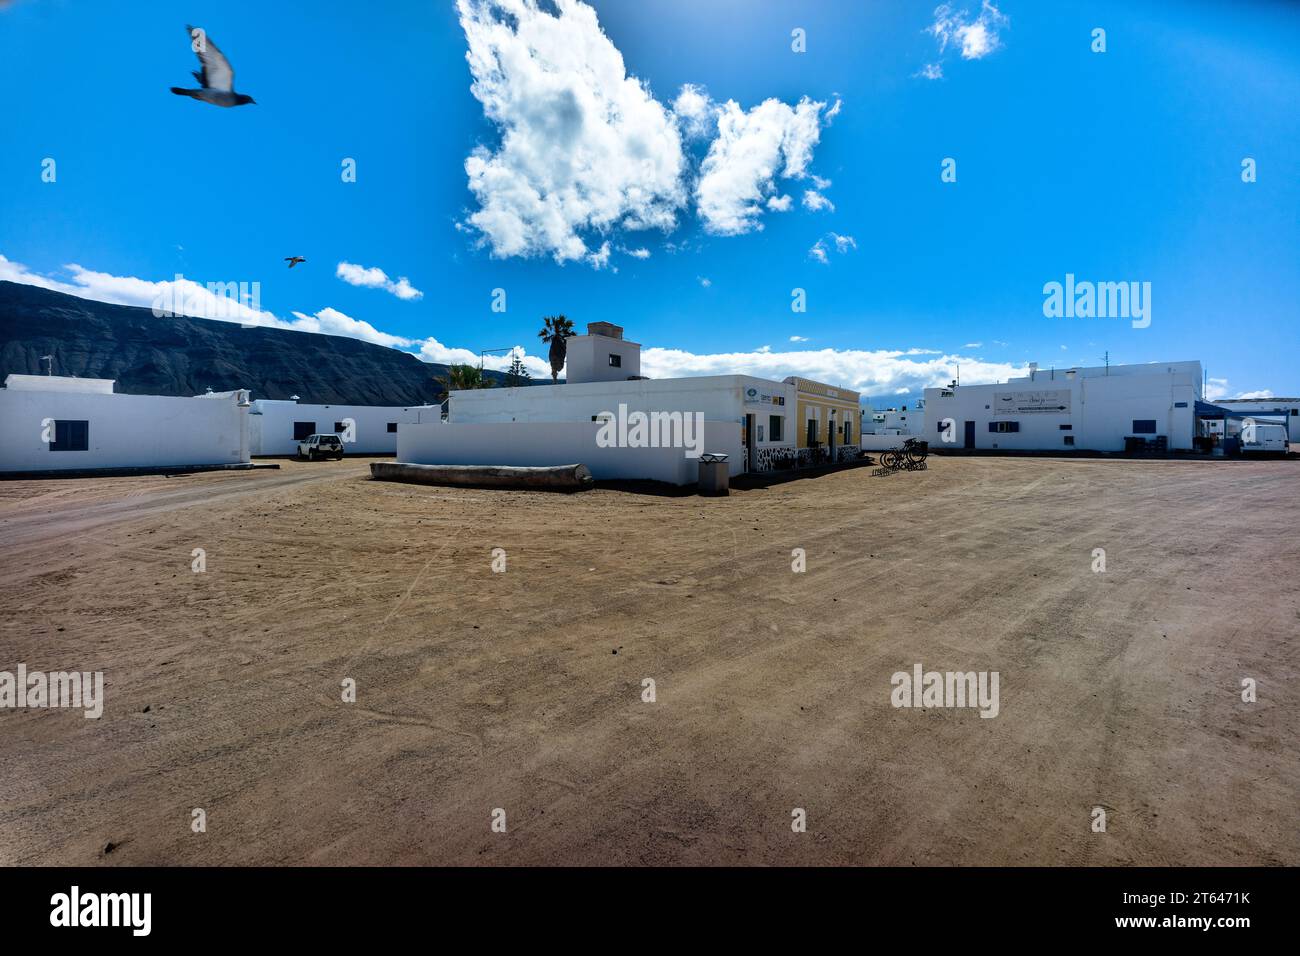 Spain, Canary Islands, La Graciosa: White buildings on the sandy streets of La Graciosa island Stock Photo